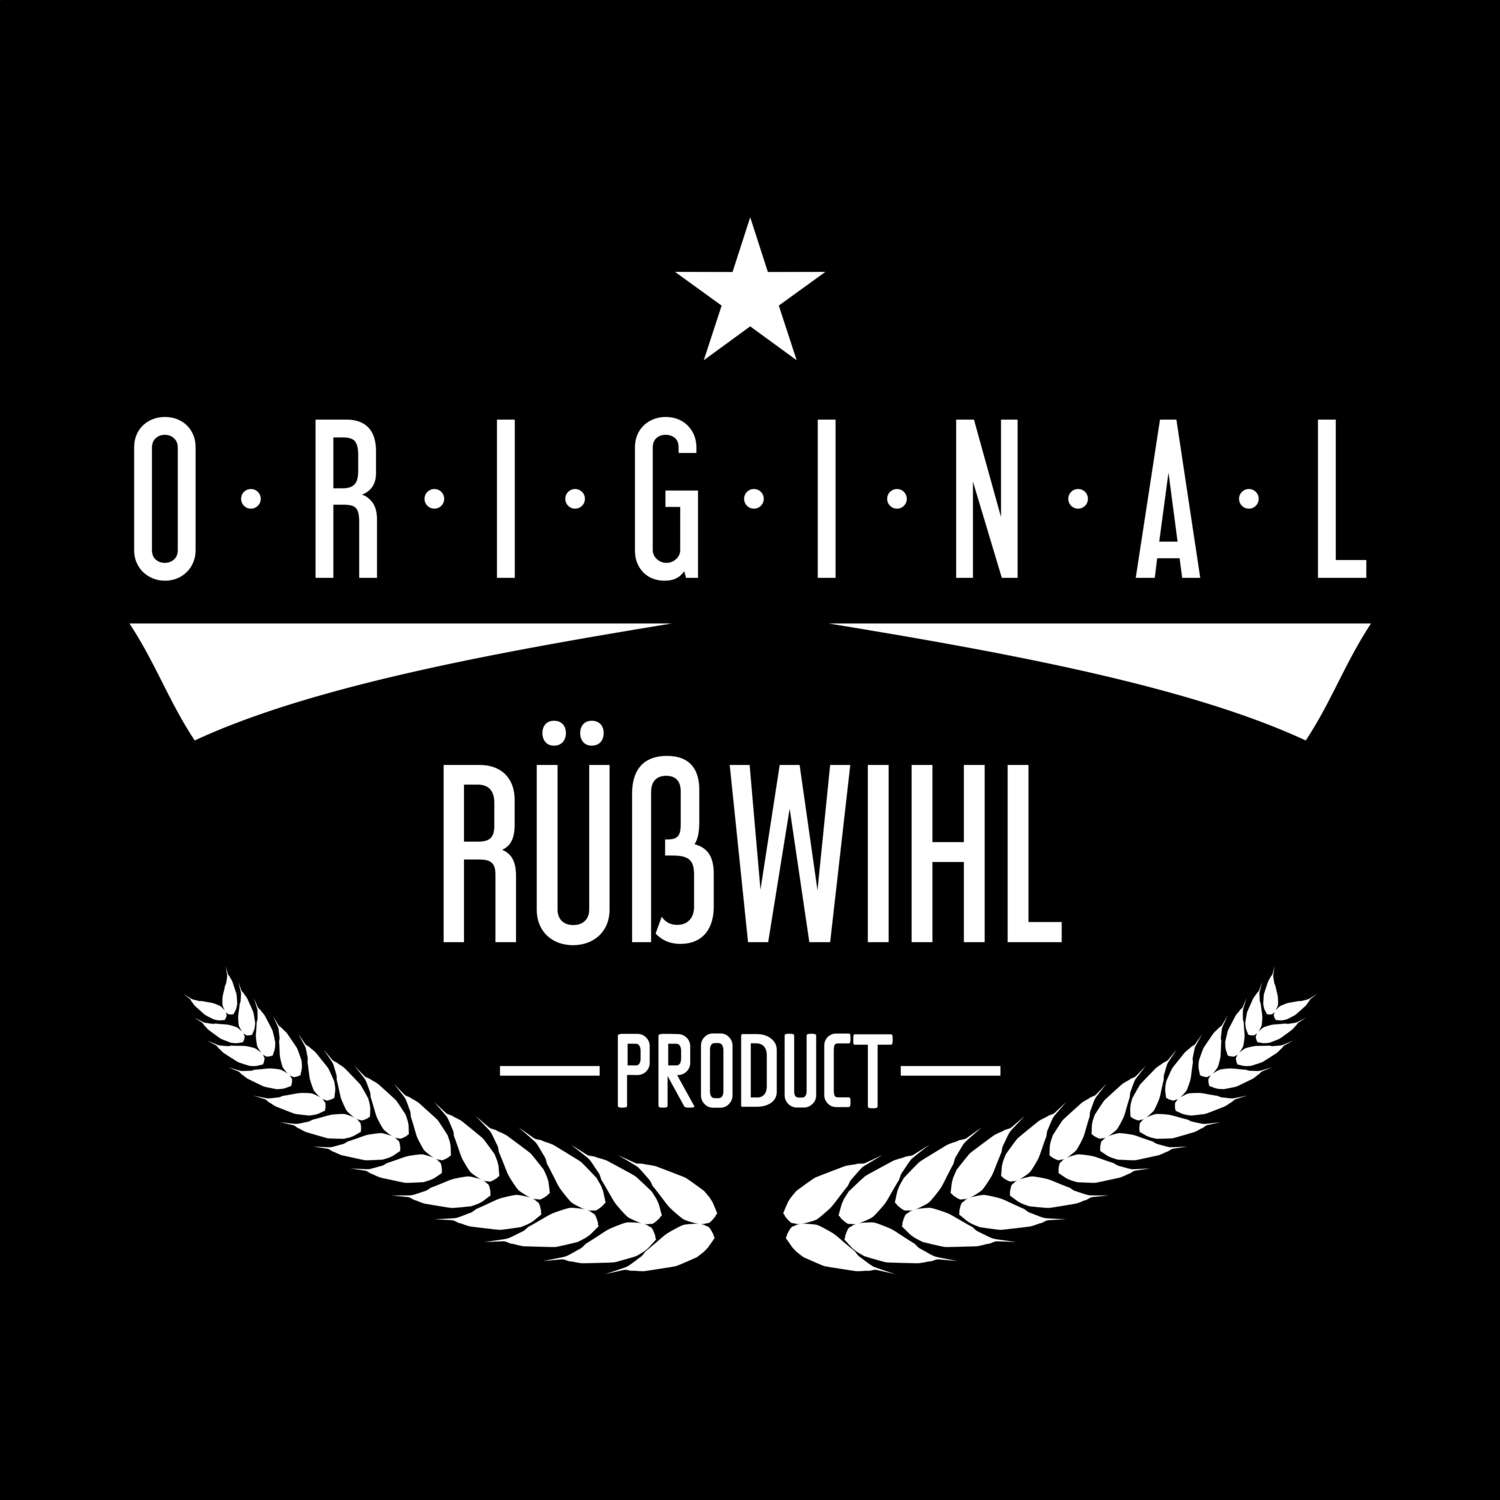 Rüßwihl T-Shirt »Original Product«